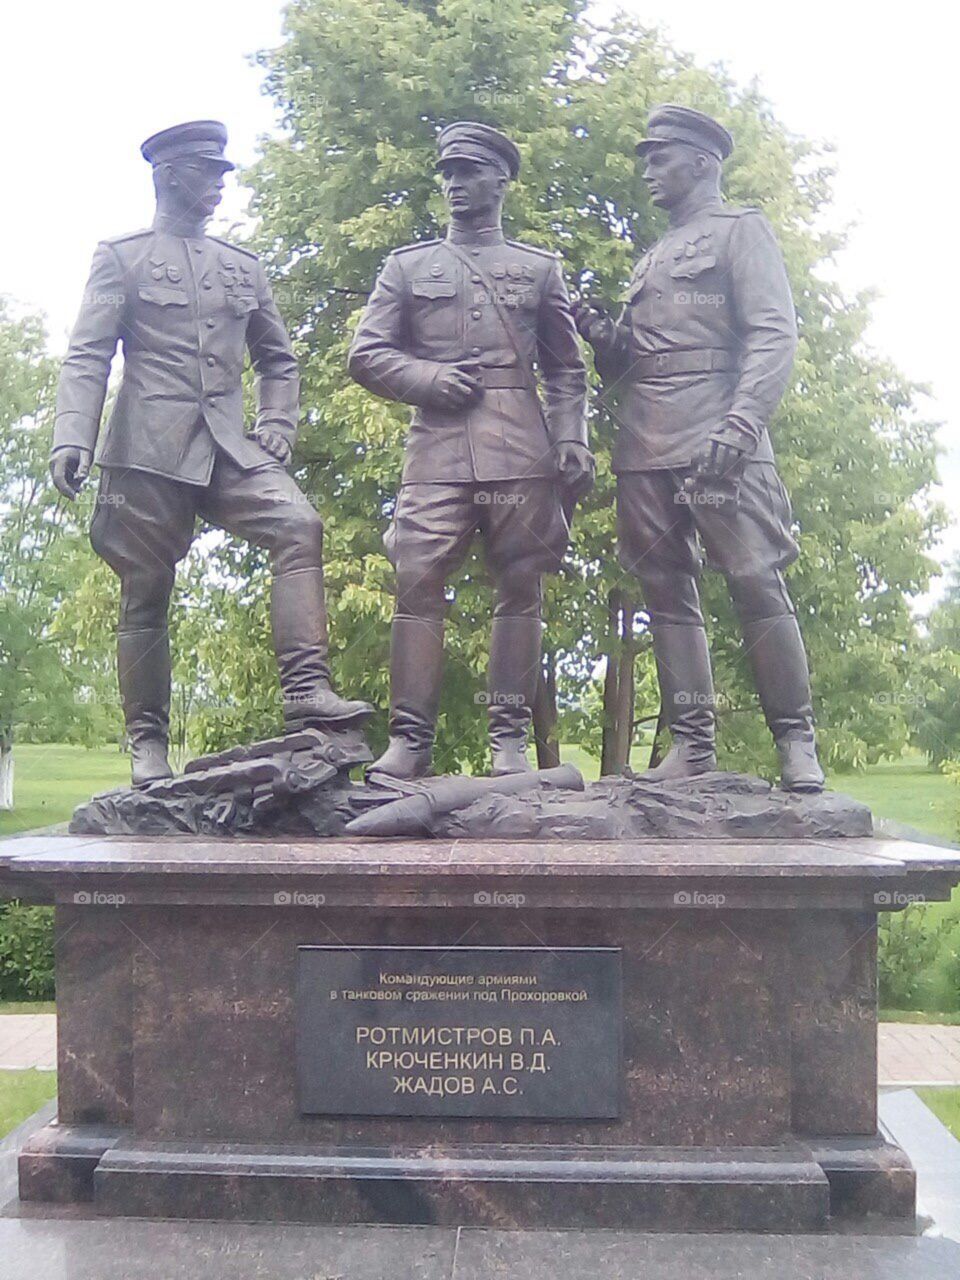 Military monument